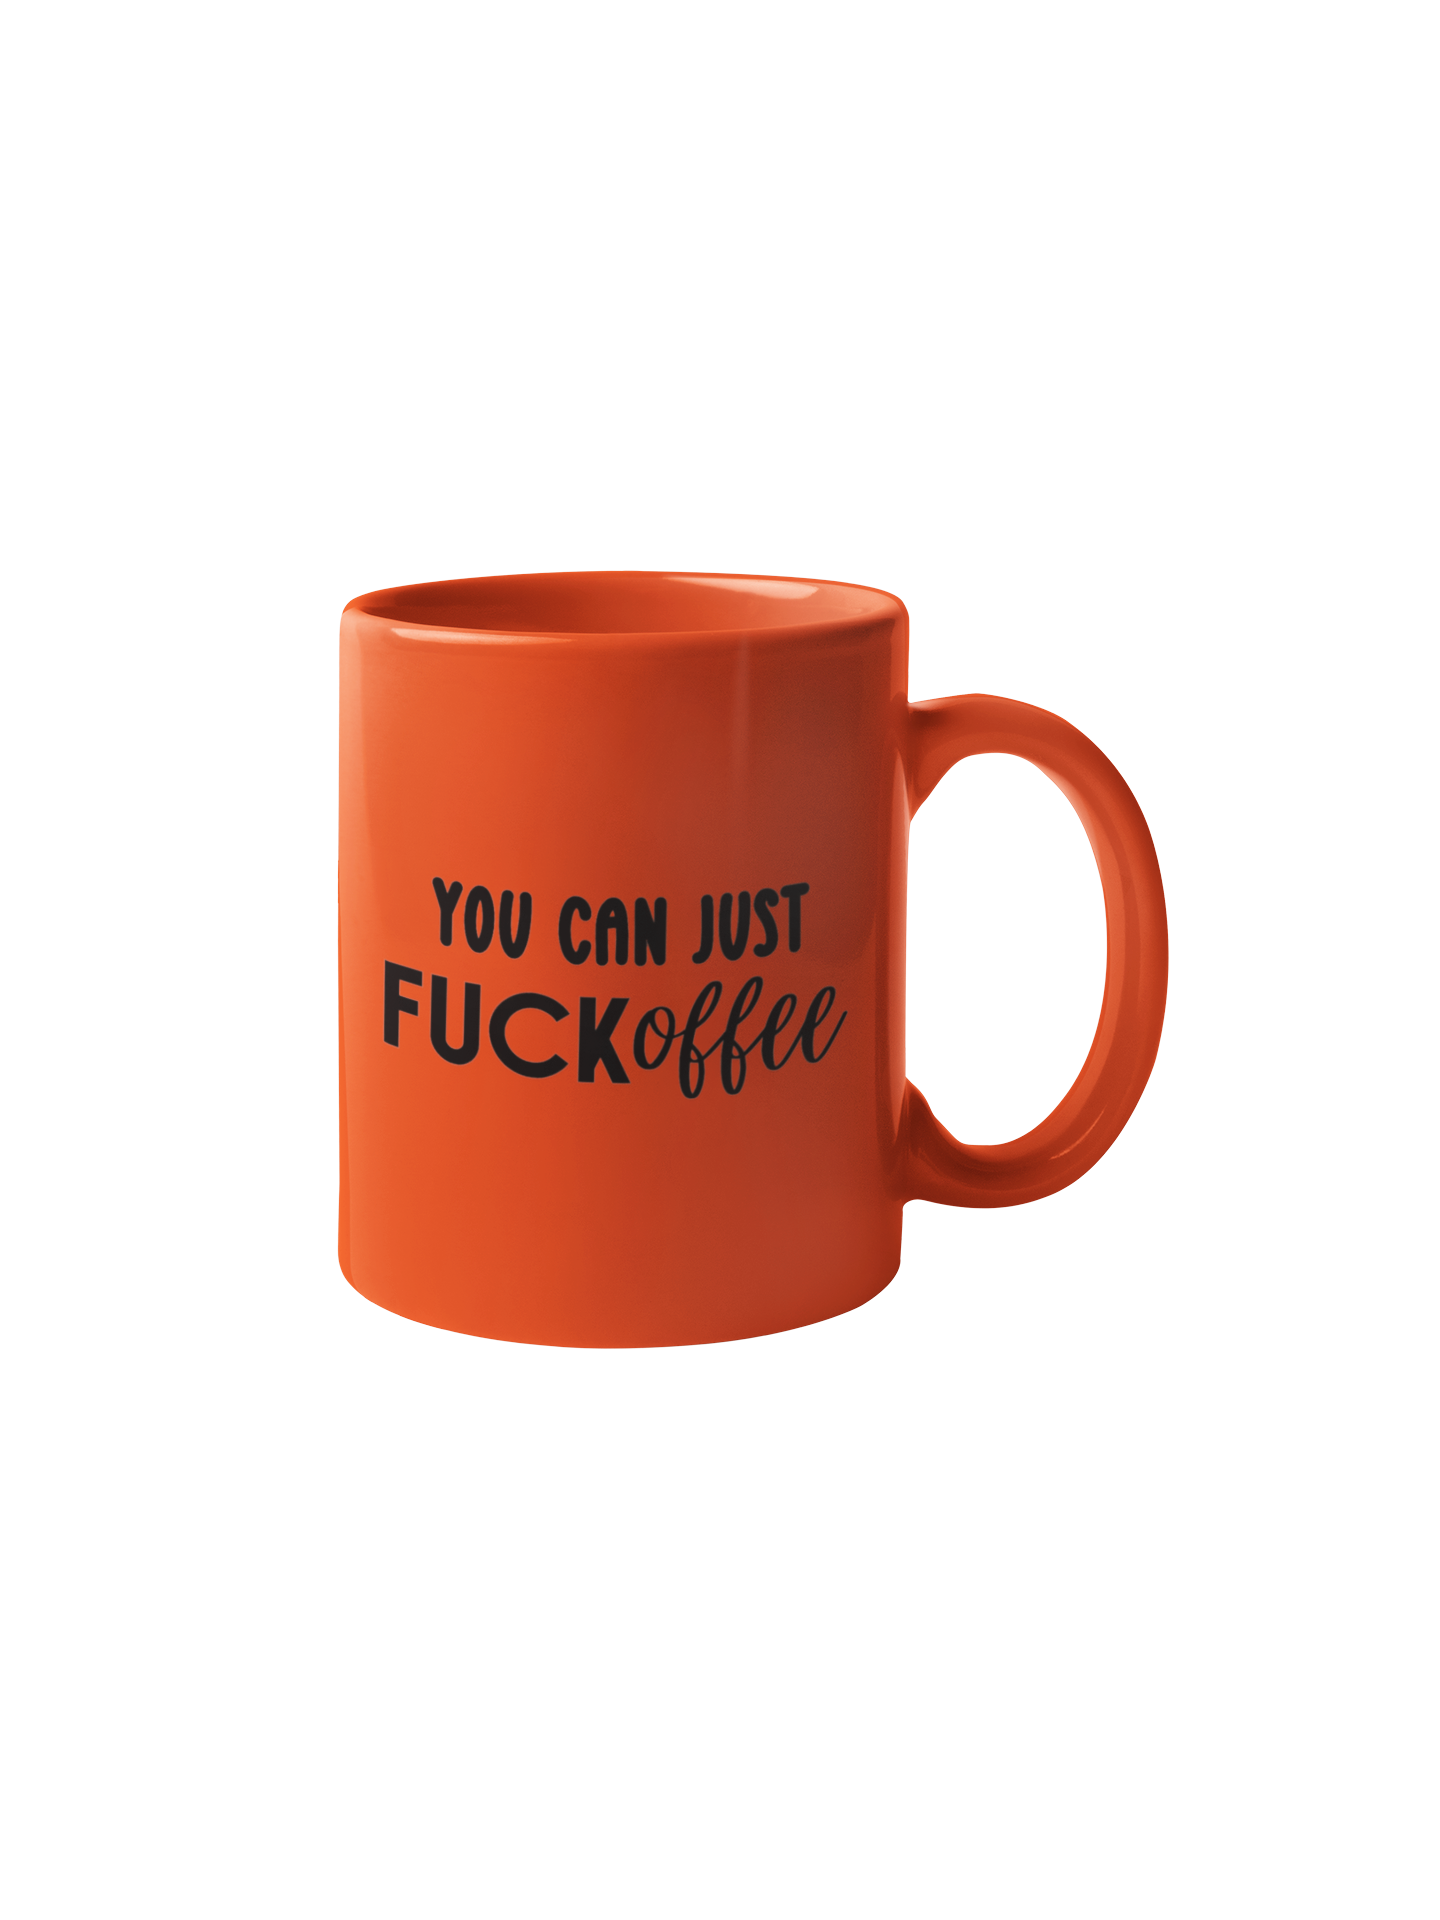 You Can FUCKoffee Mug